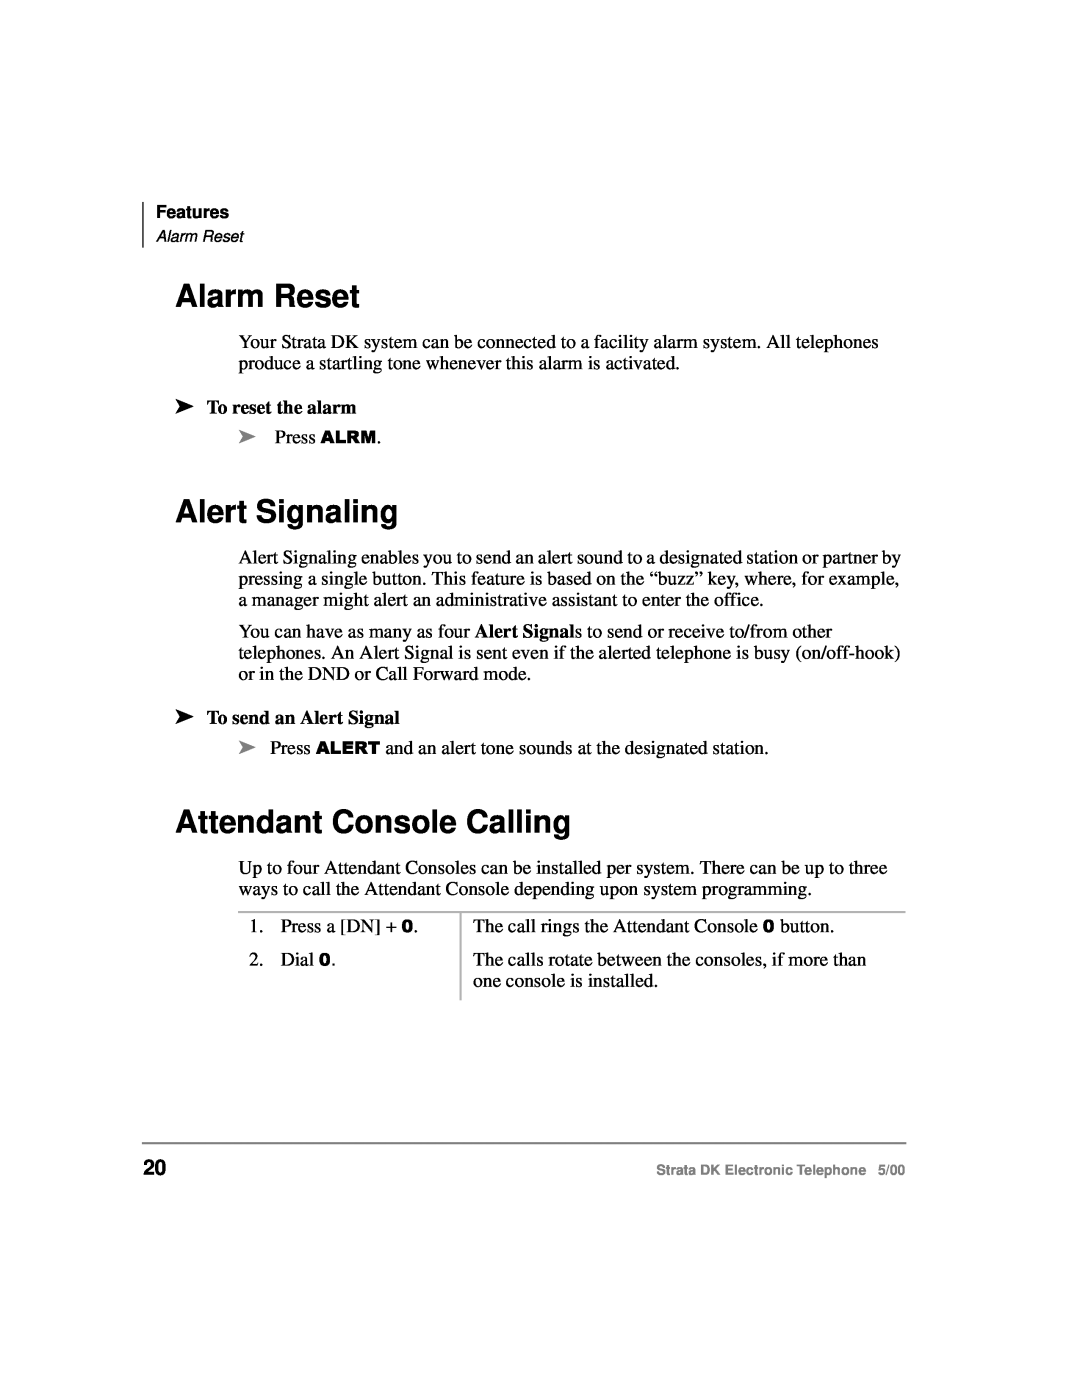 Toshiba Strata DK Alarm Reset, Alert Signaling, Attendant Console Calling, To reset the alarm, To send an Alert Signal 